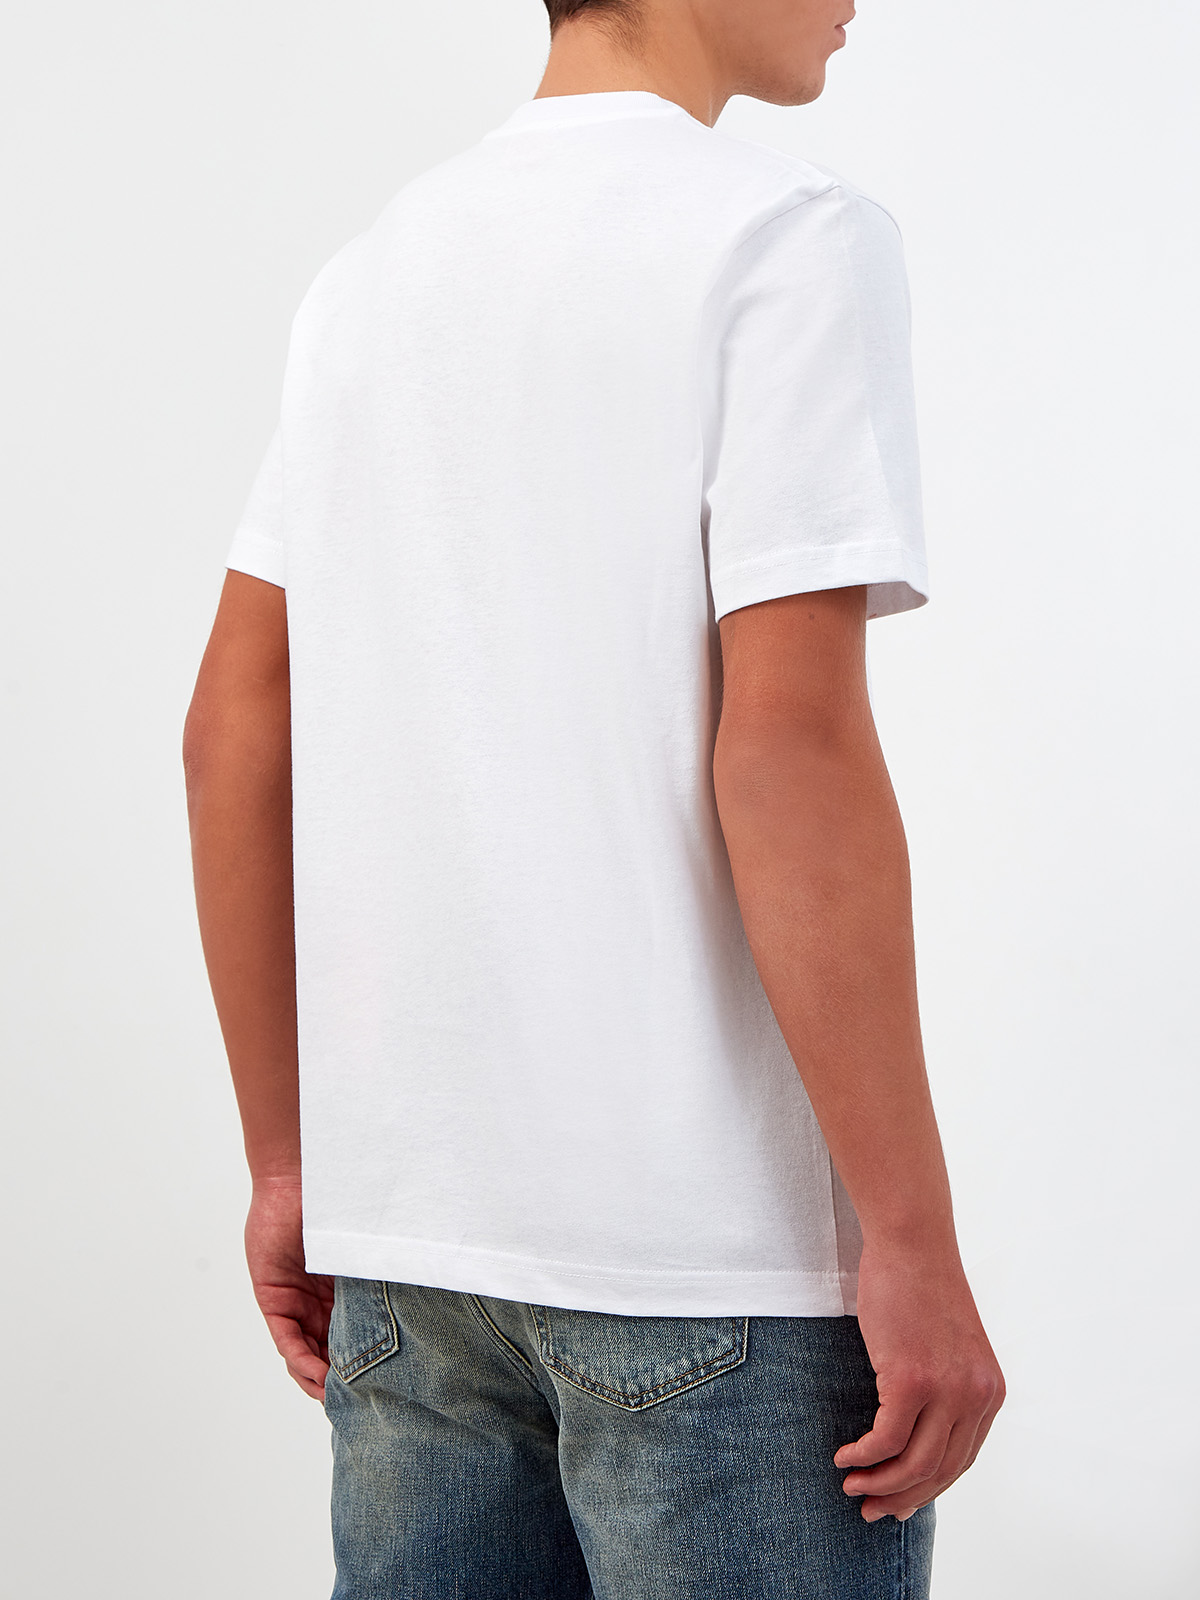 Хлопковая футболка T-Just с макро-логотипом Oval D DIESEL, цвет белый, размер S;M;L;XL;2XL;3XL - фото 4